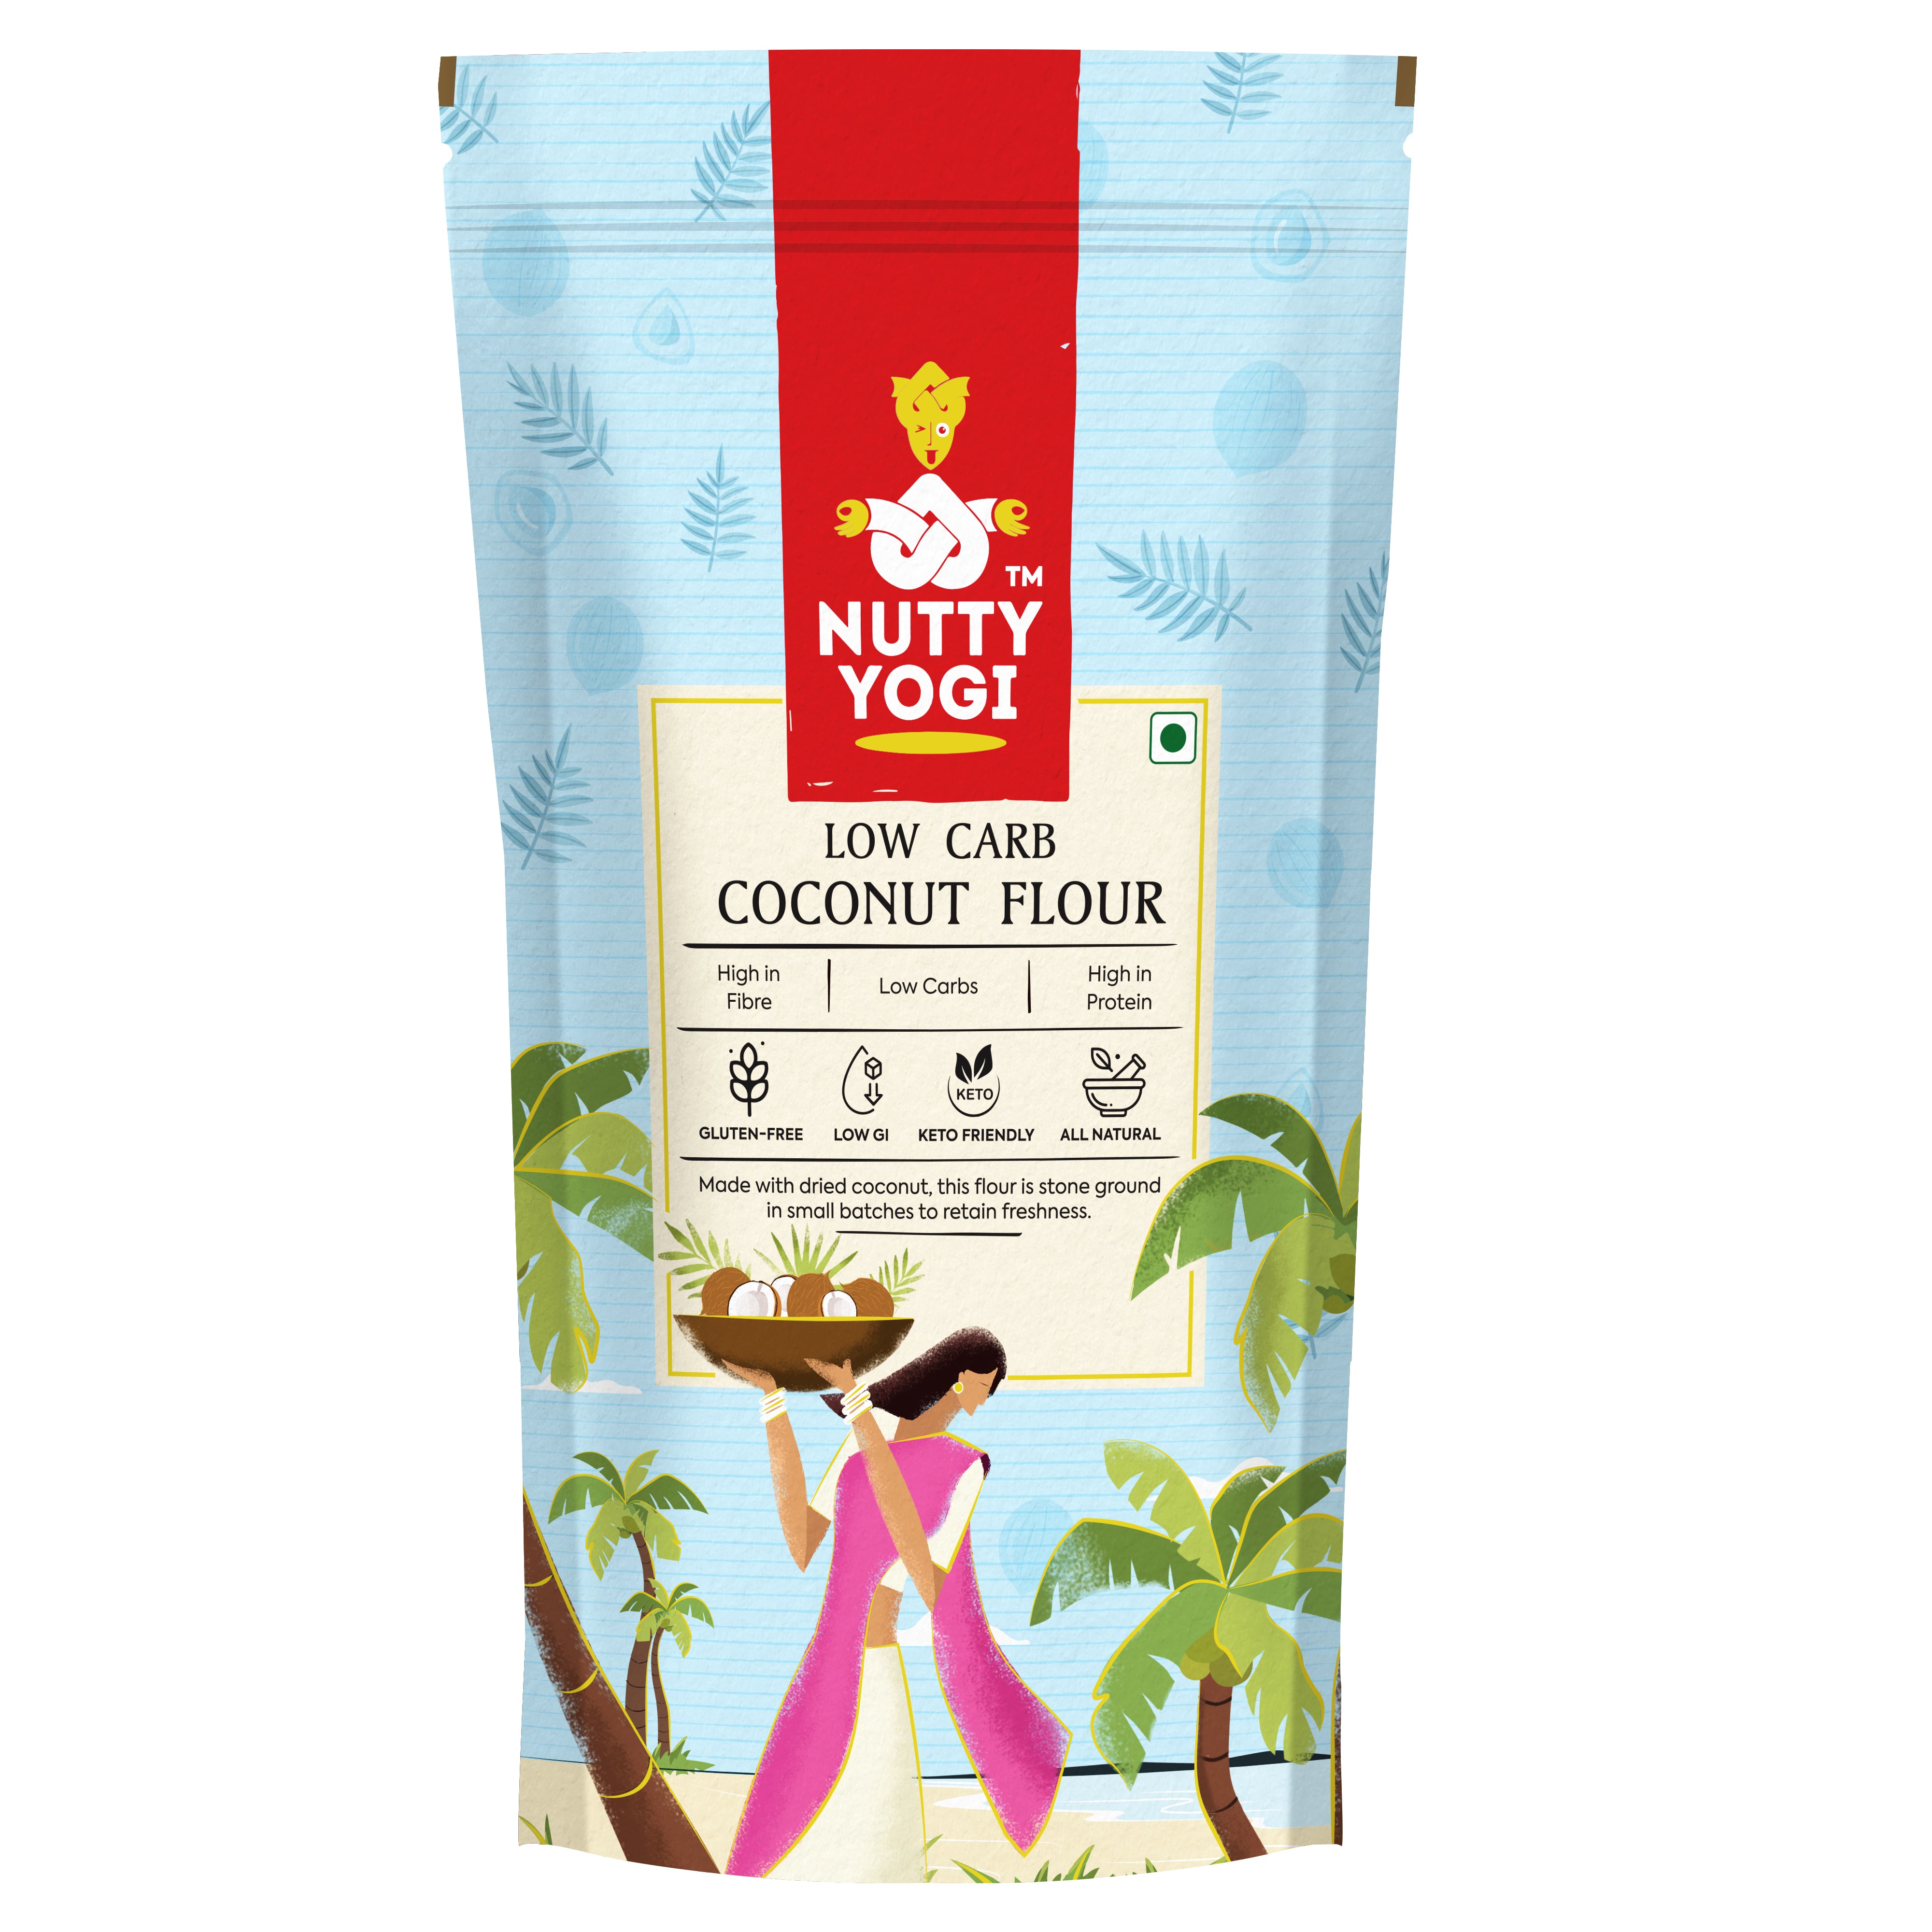 Nutty Yogi Coconut Flour 400g pack of 1